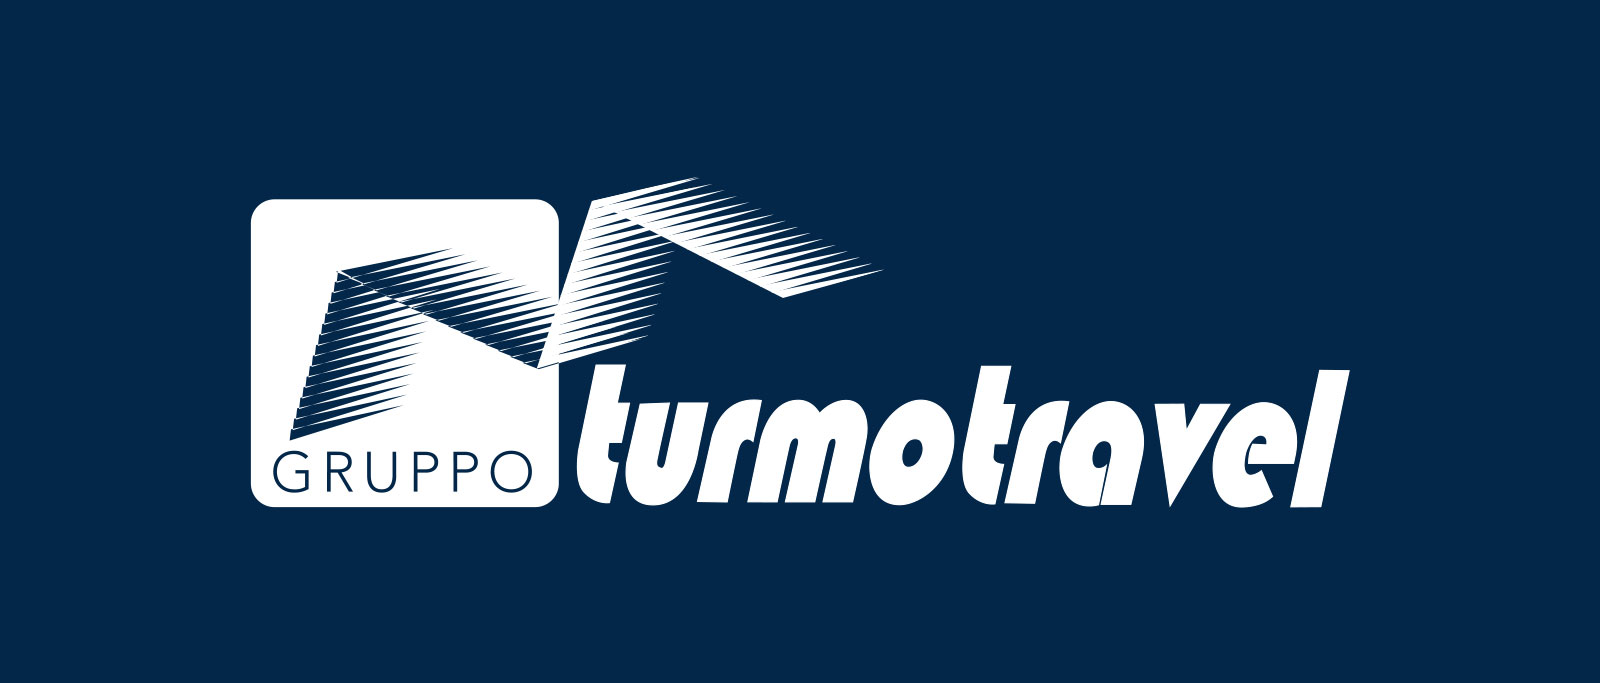 Interview to the Managing Director Massimiliano Molinu of Gruppo Turmo Travel